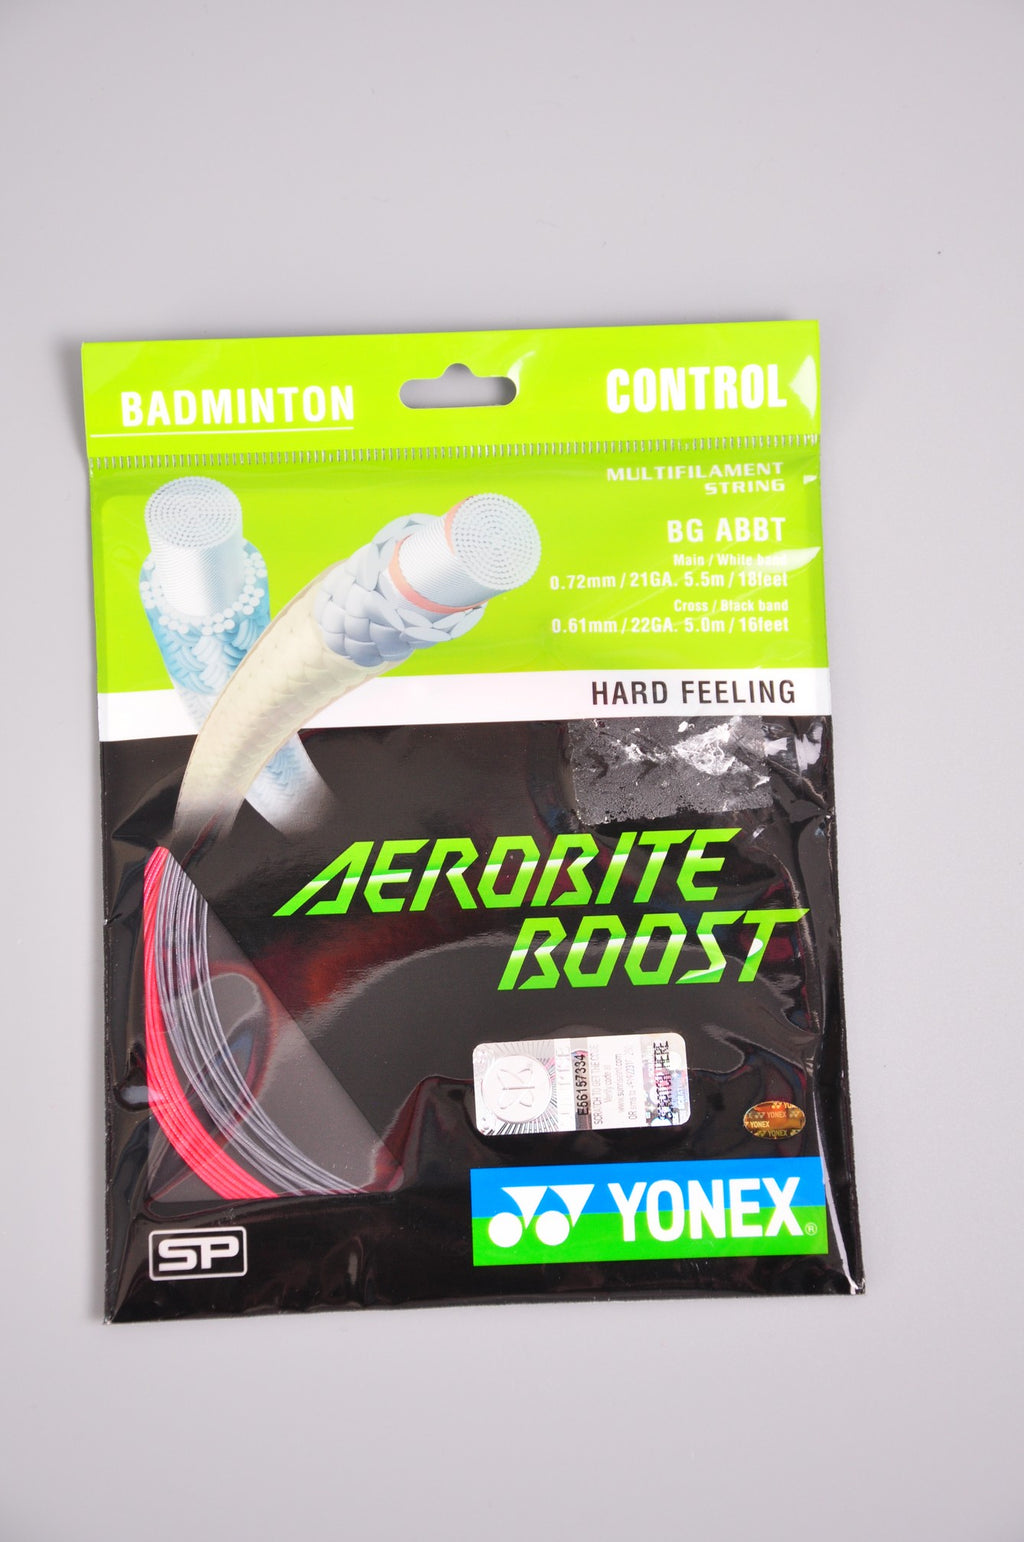 Yonex Aerobite Boost Badminton Racket String - badminton racket review